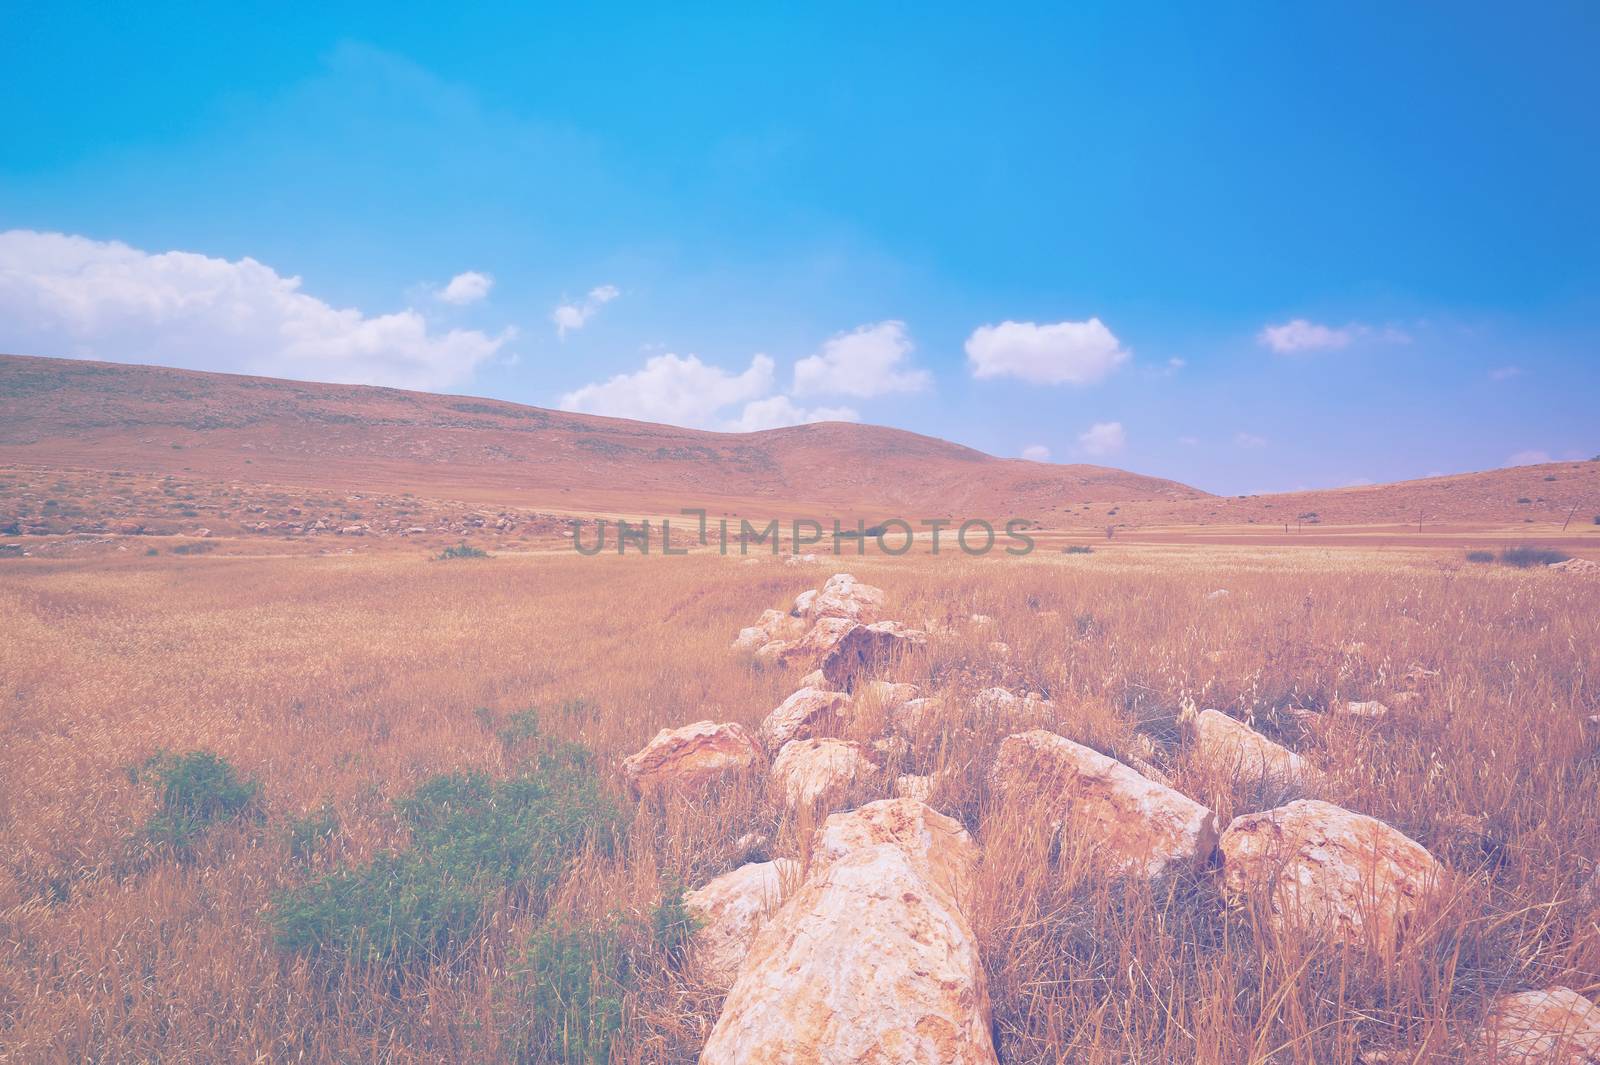 Deserted plain in Israel  by gkuna